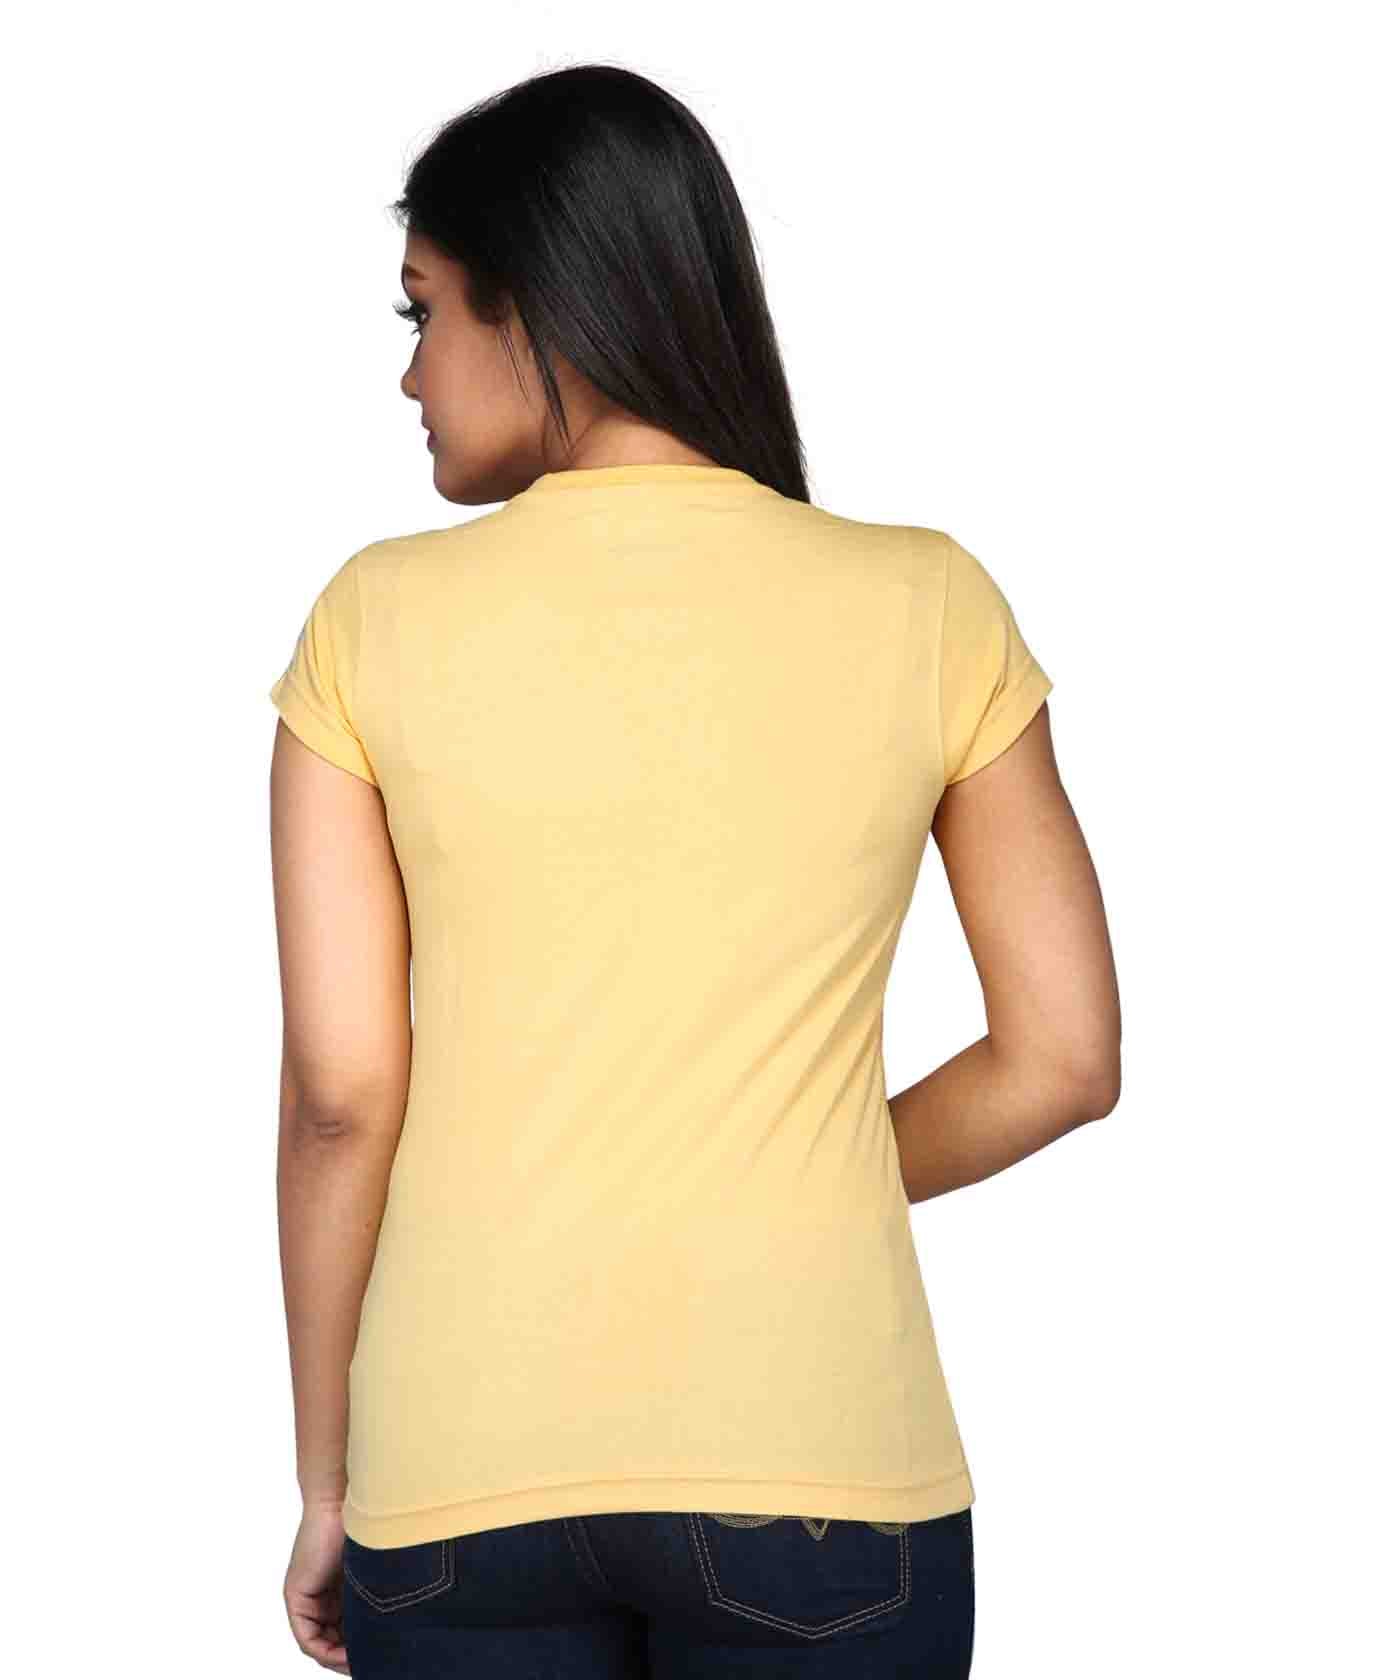 Art Border - Block Print Tees for Women - Golden Yellow